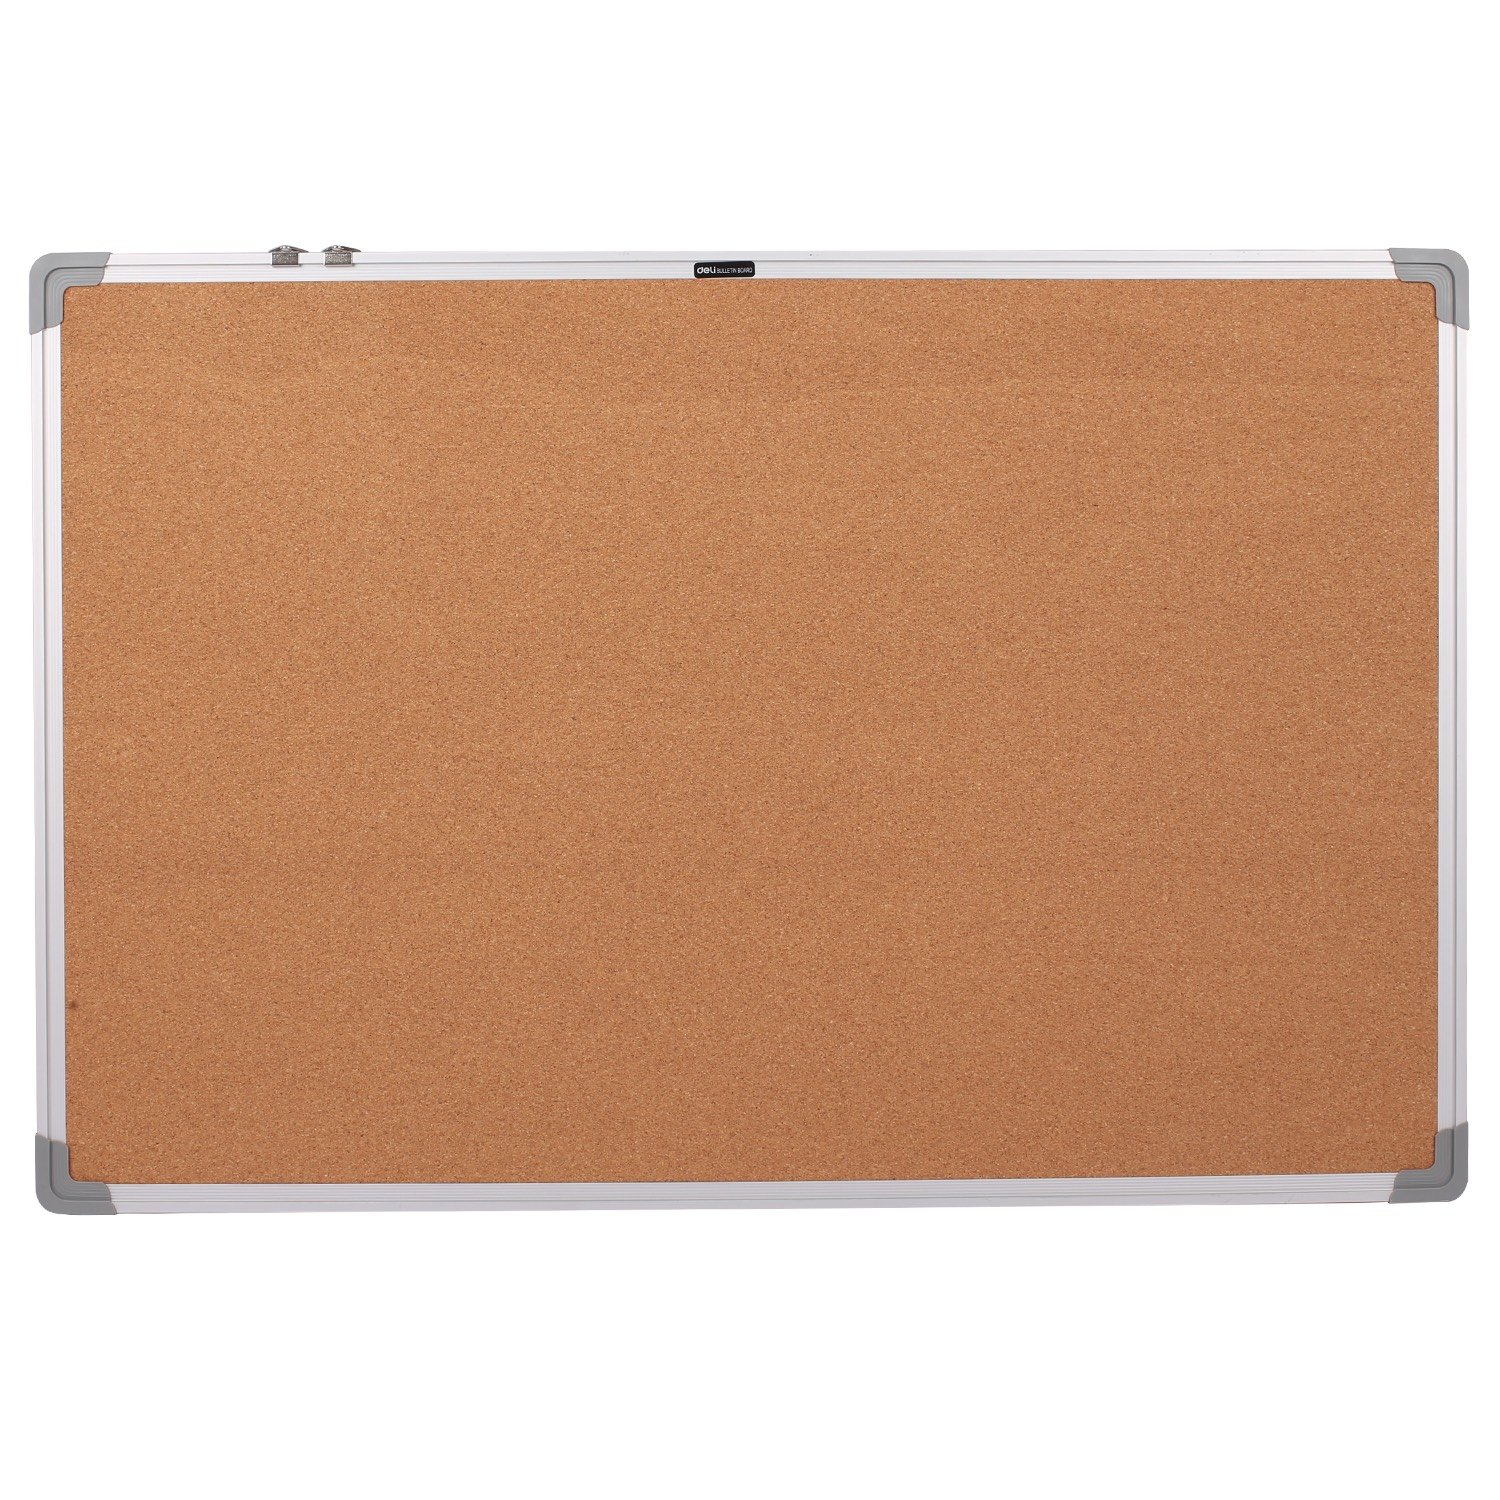 Deli Dry Erase Board 450x600mm – Value Co – South Africa